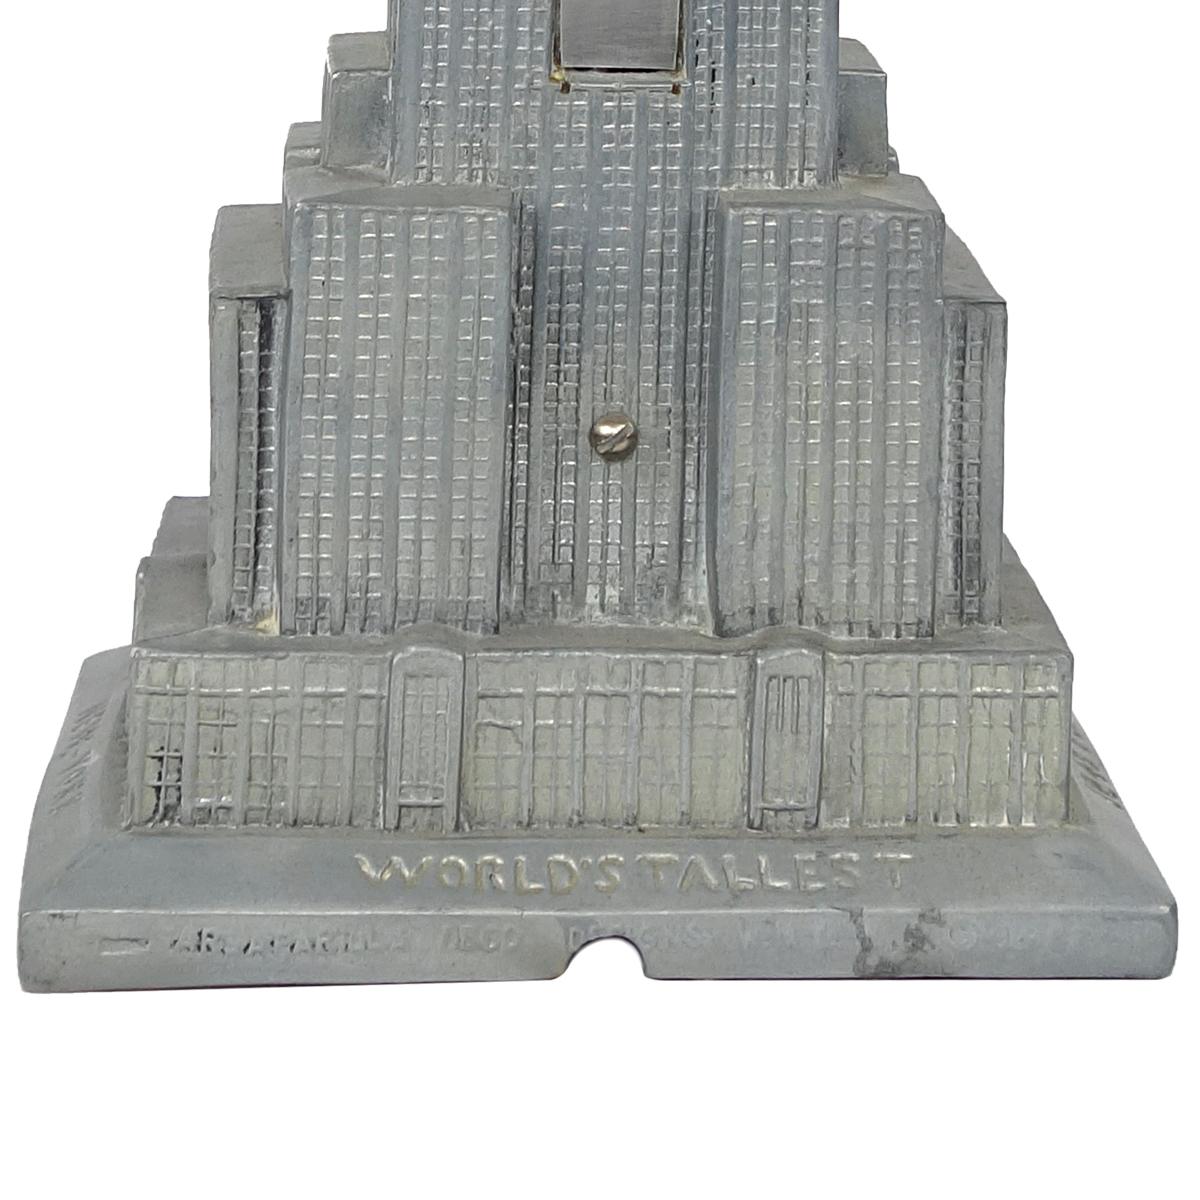 Table Lamp by Sarsaparilla Deco Designs Model of Empire State Building For Sale 5